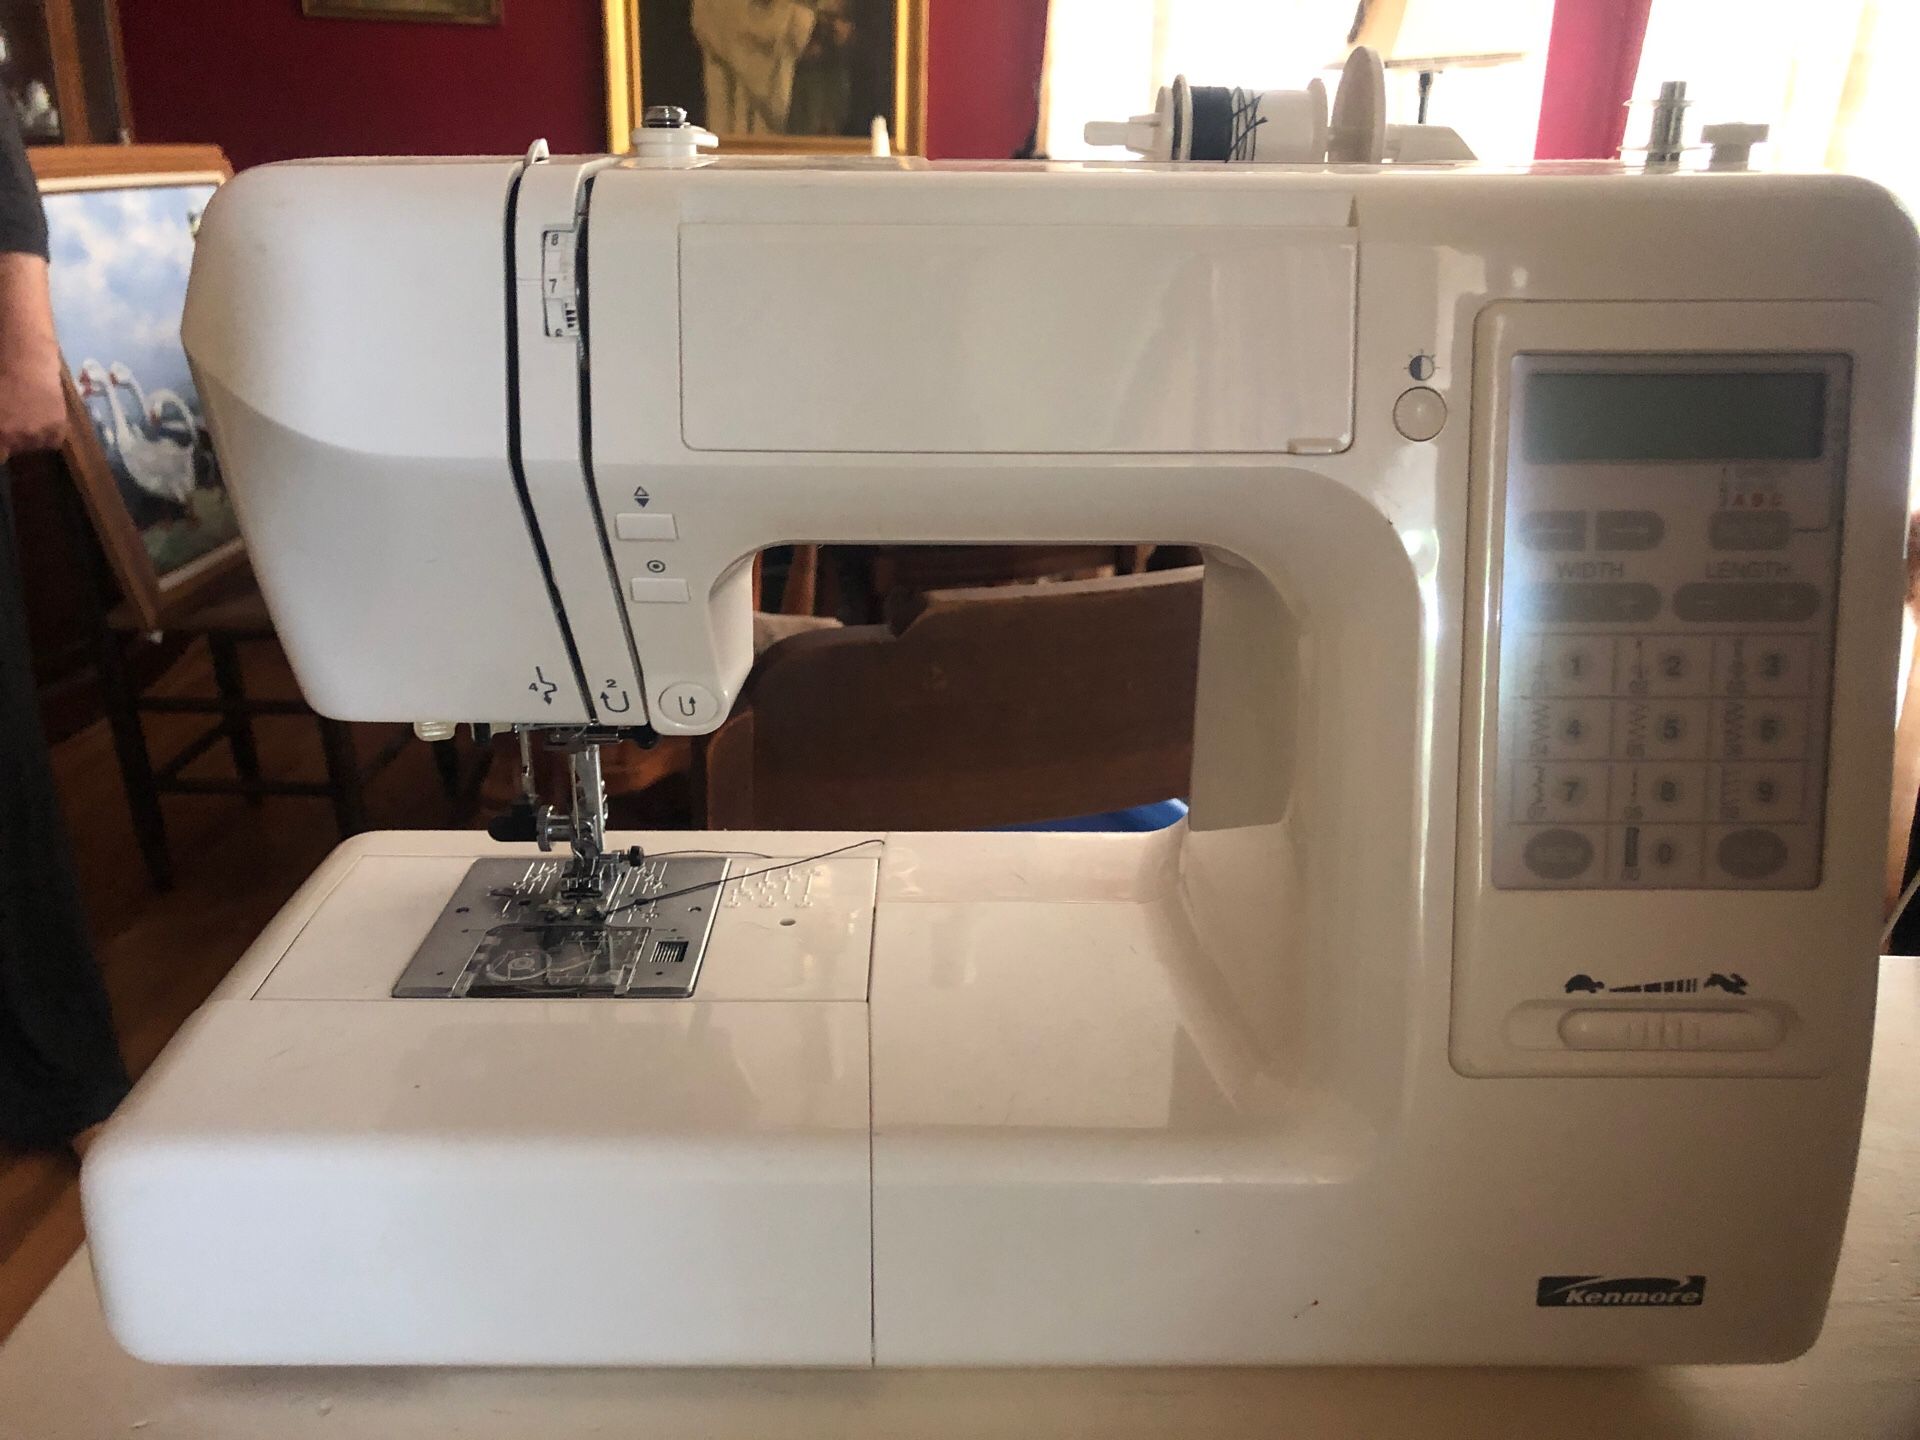 Kenmore sewing machine and bag!